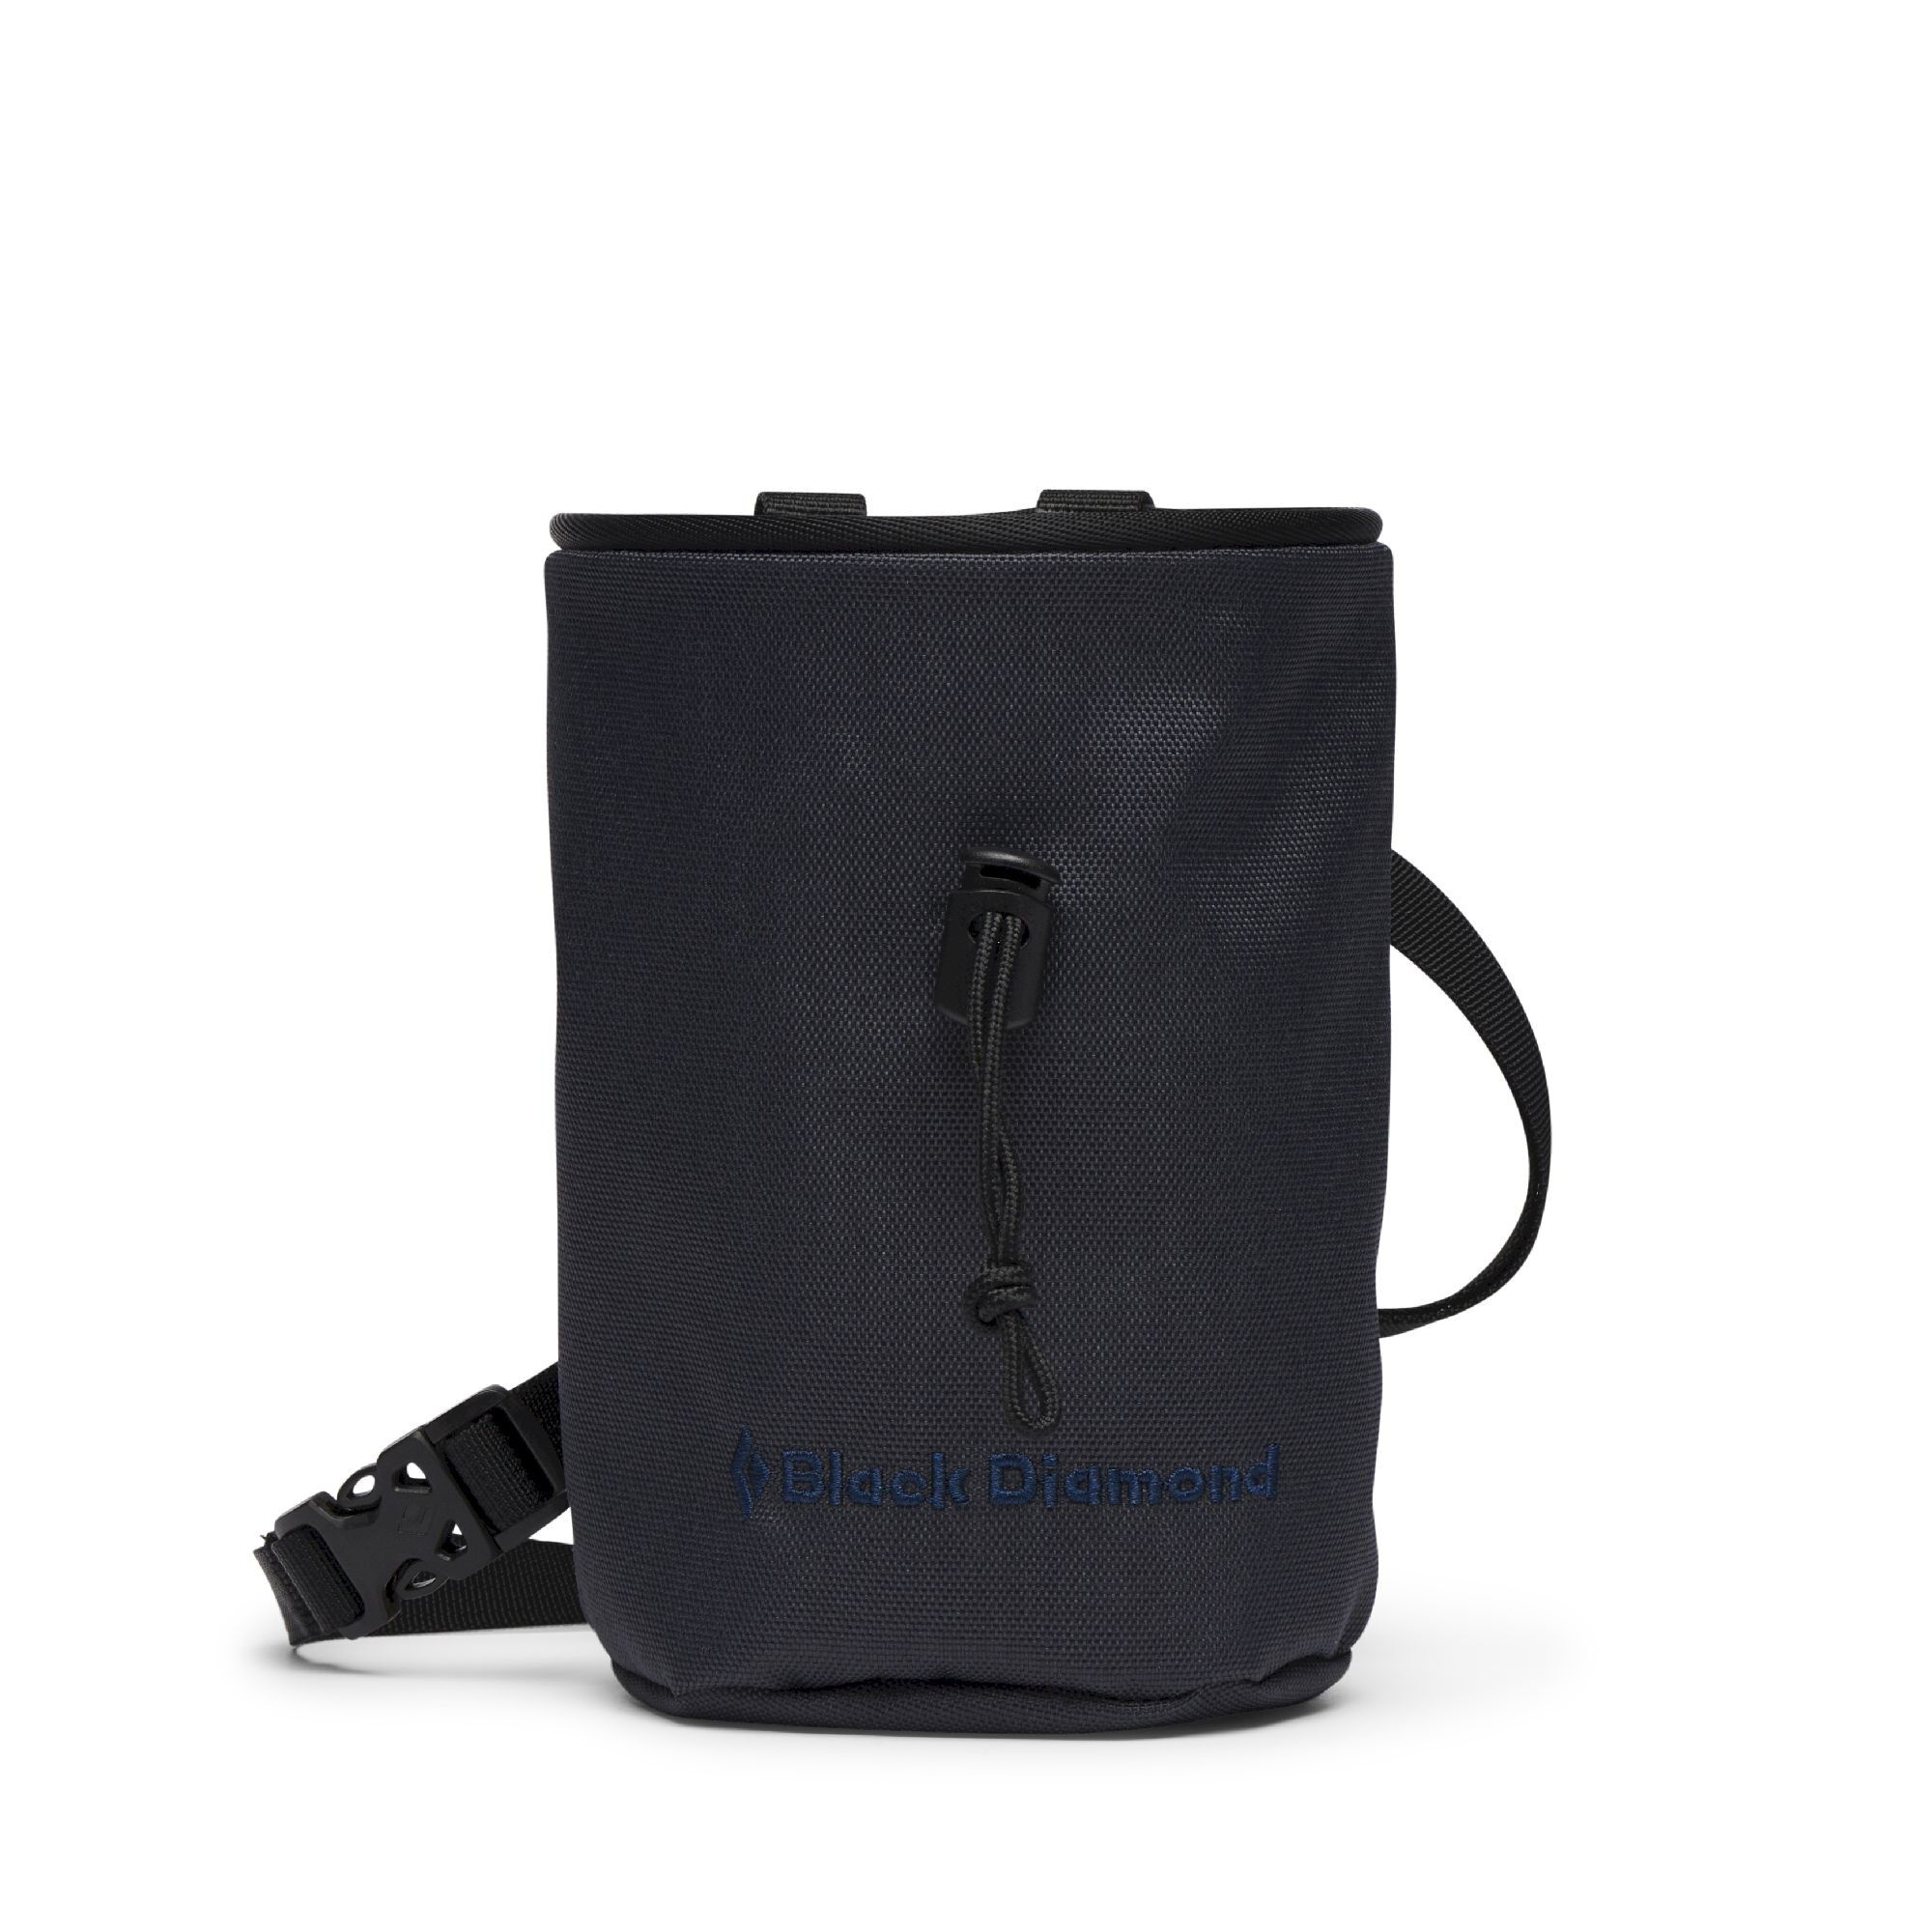 Black Diamond Mojo Chalk Bag - Sac à magnésie | Hardloop